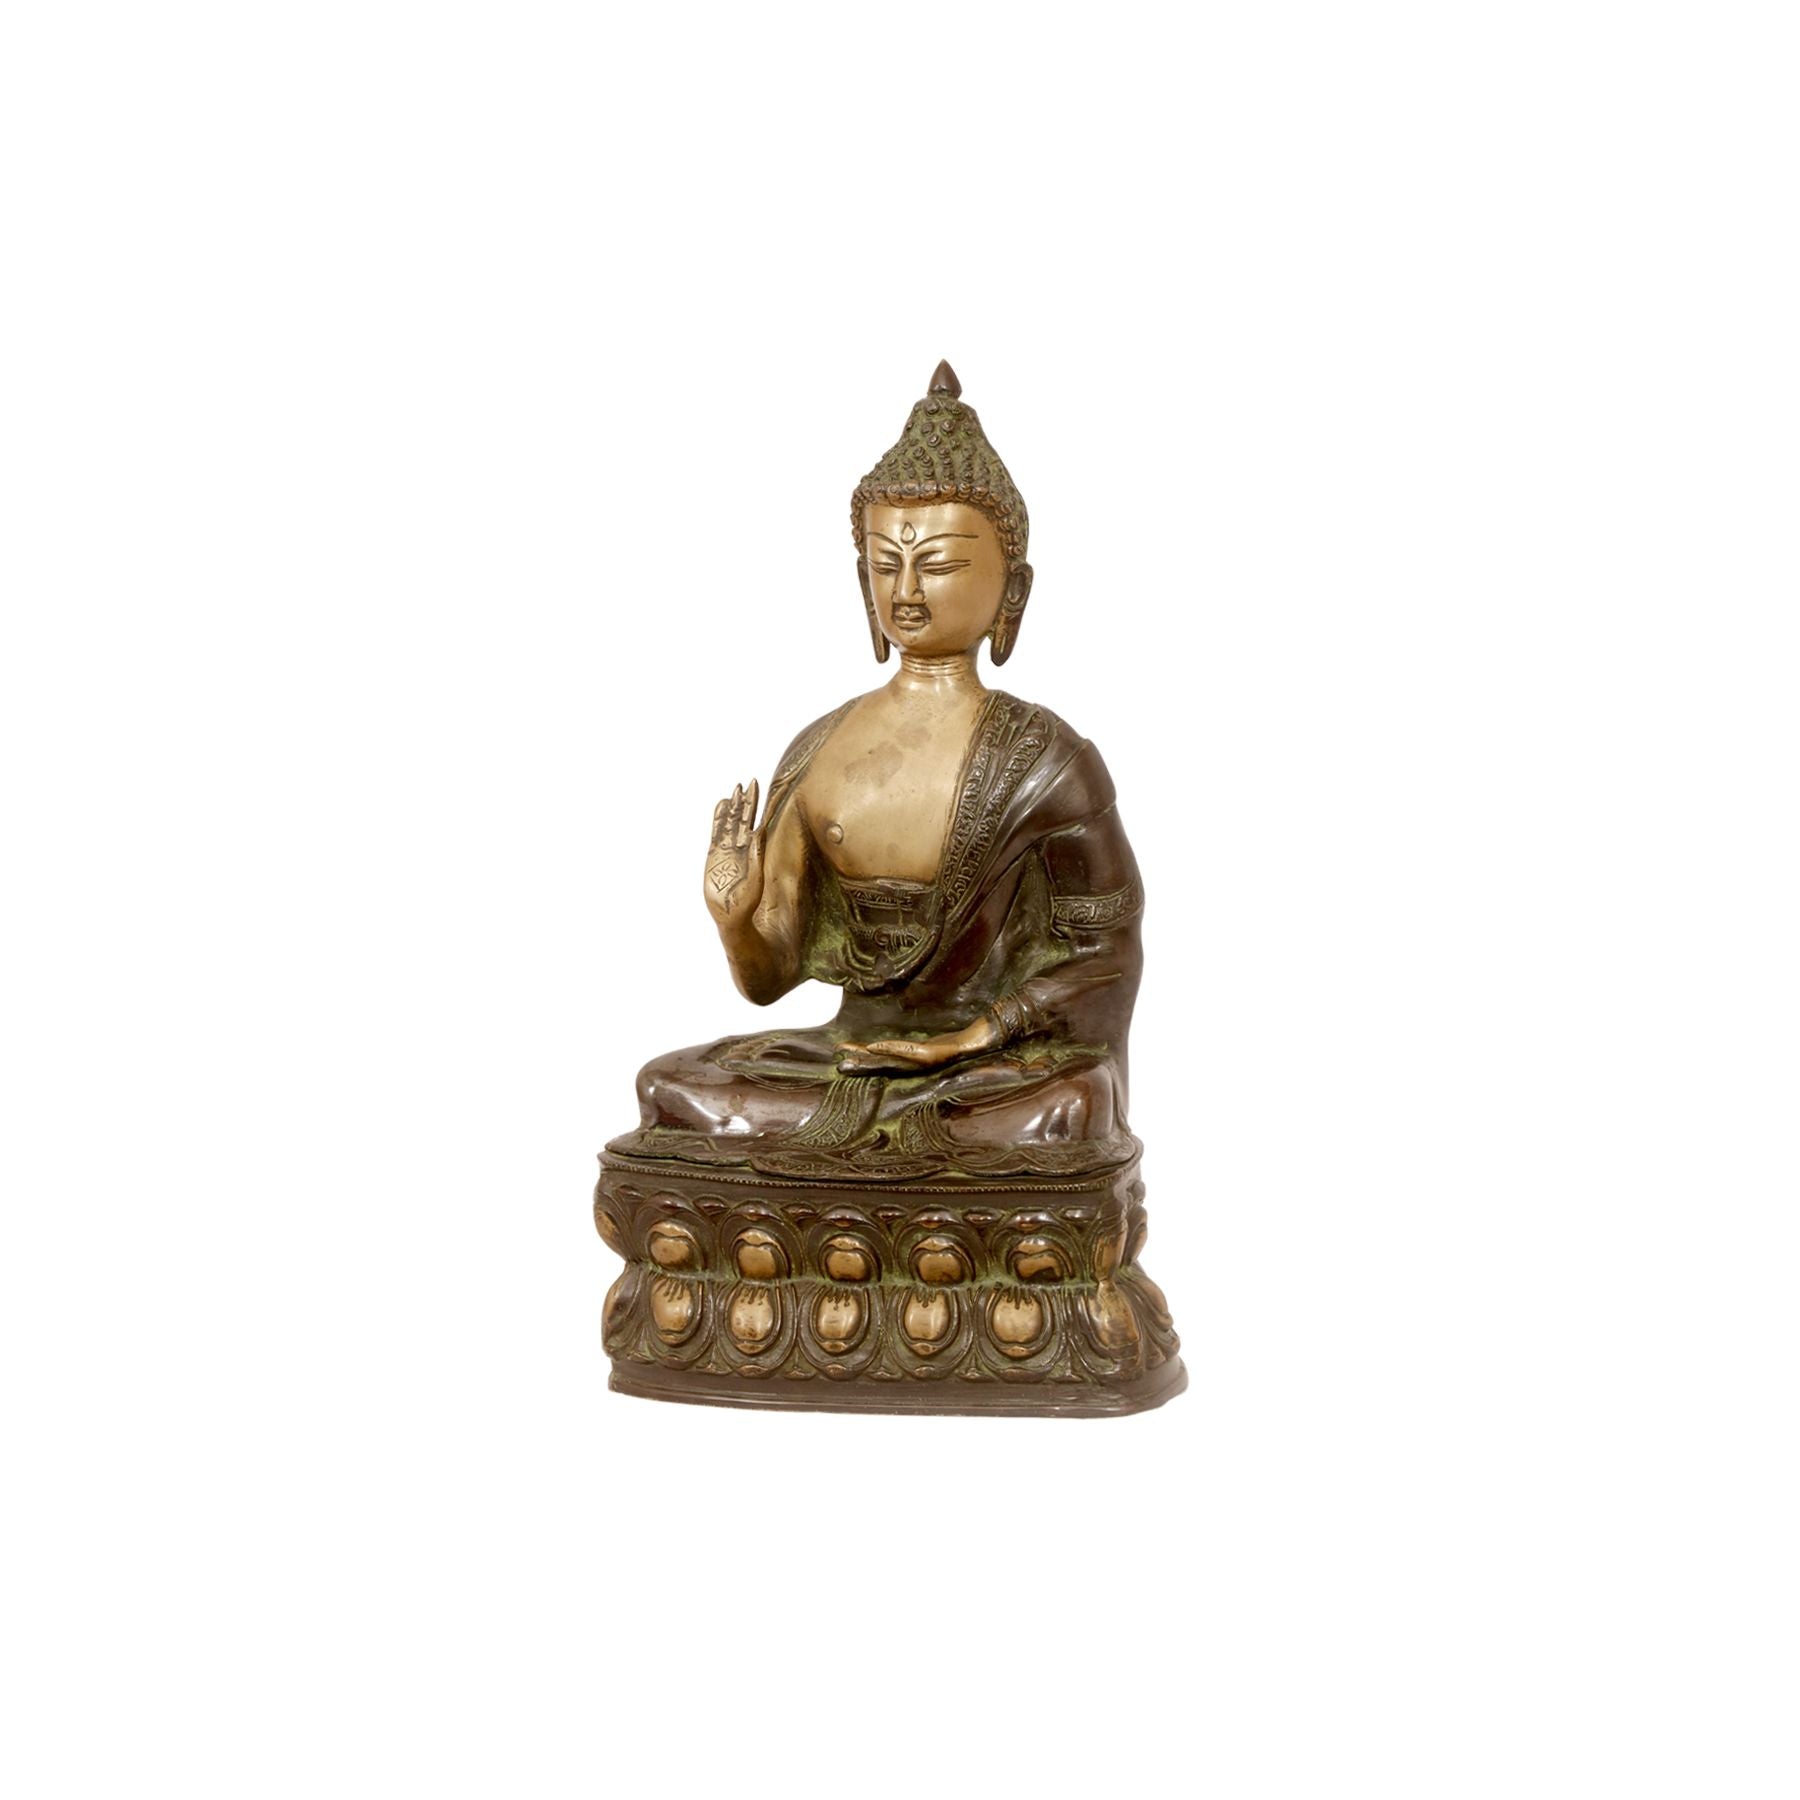 Antique Full Body Buddha Statue – 4kg Statue